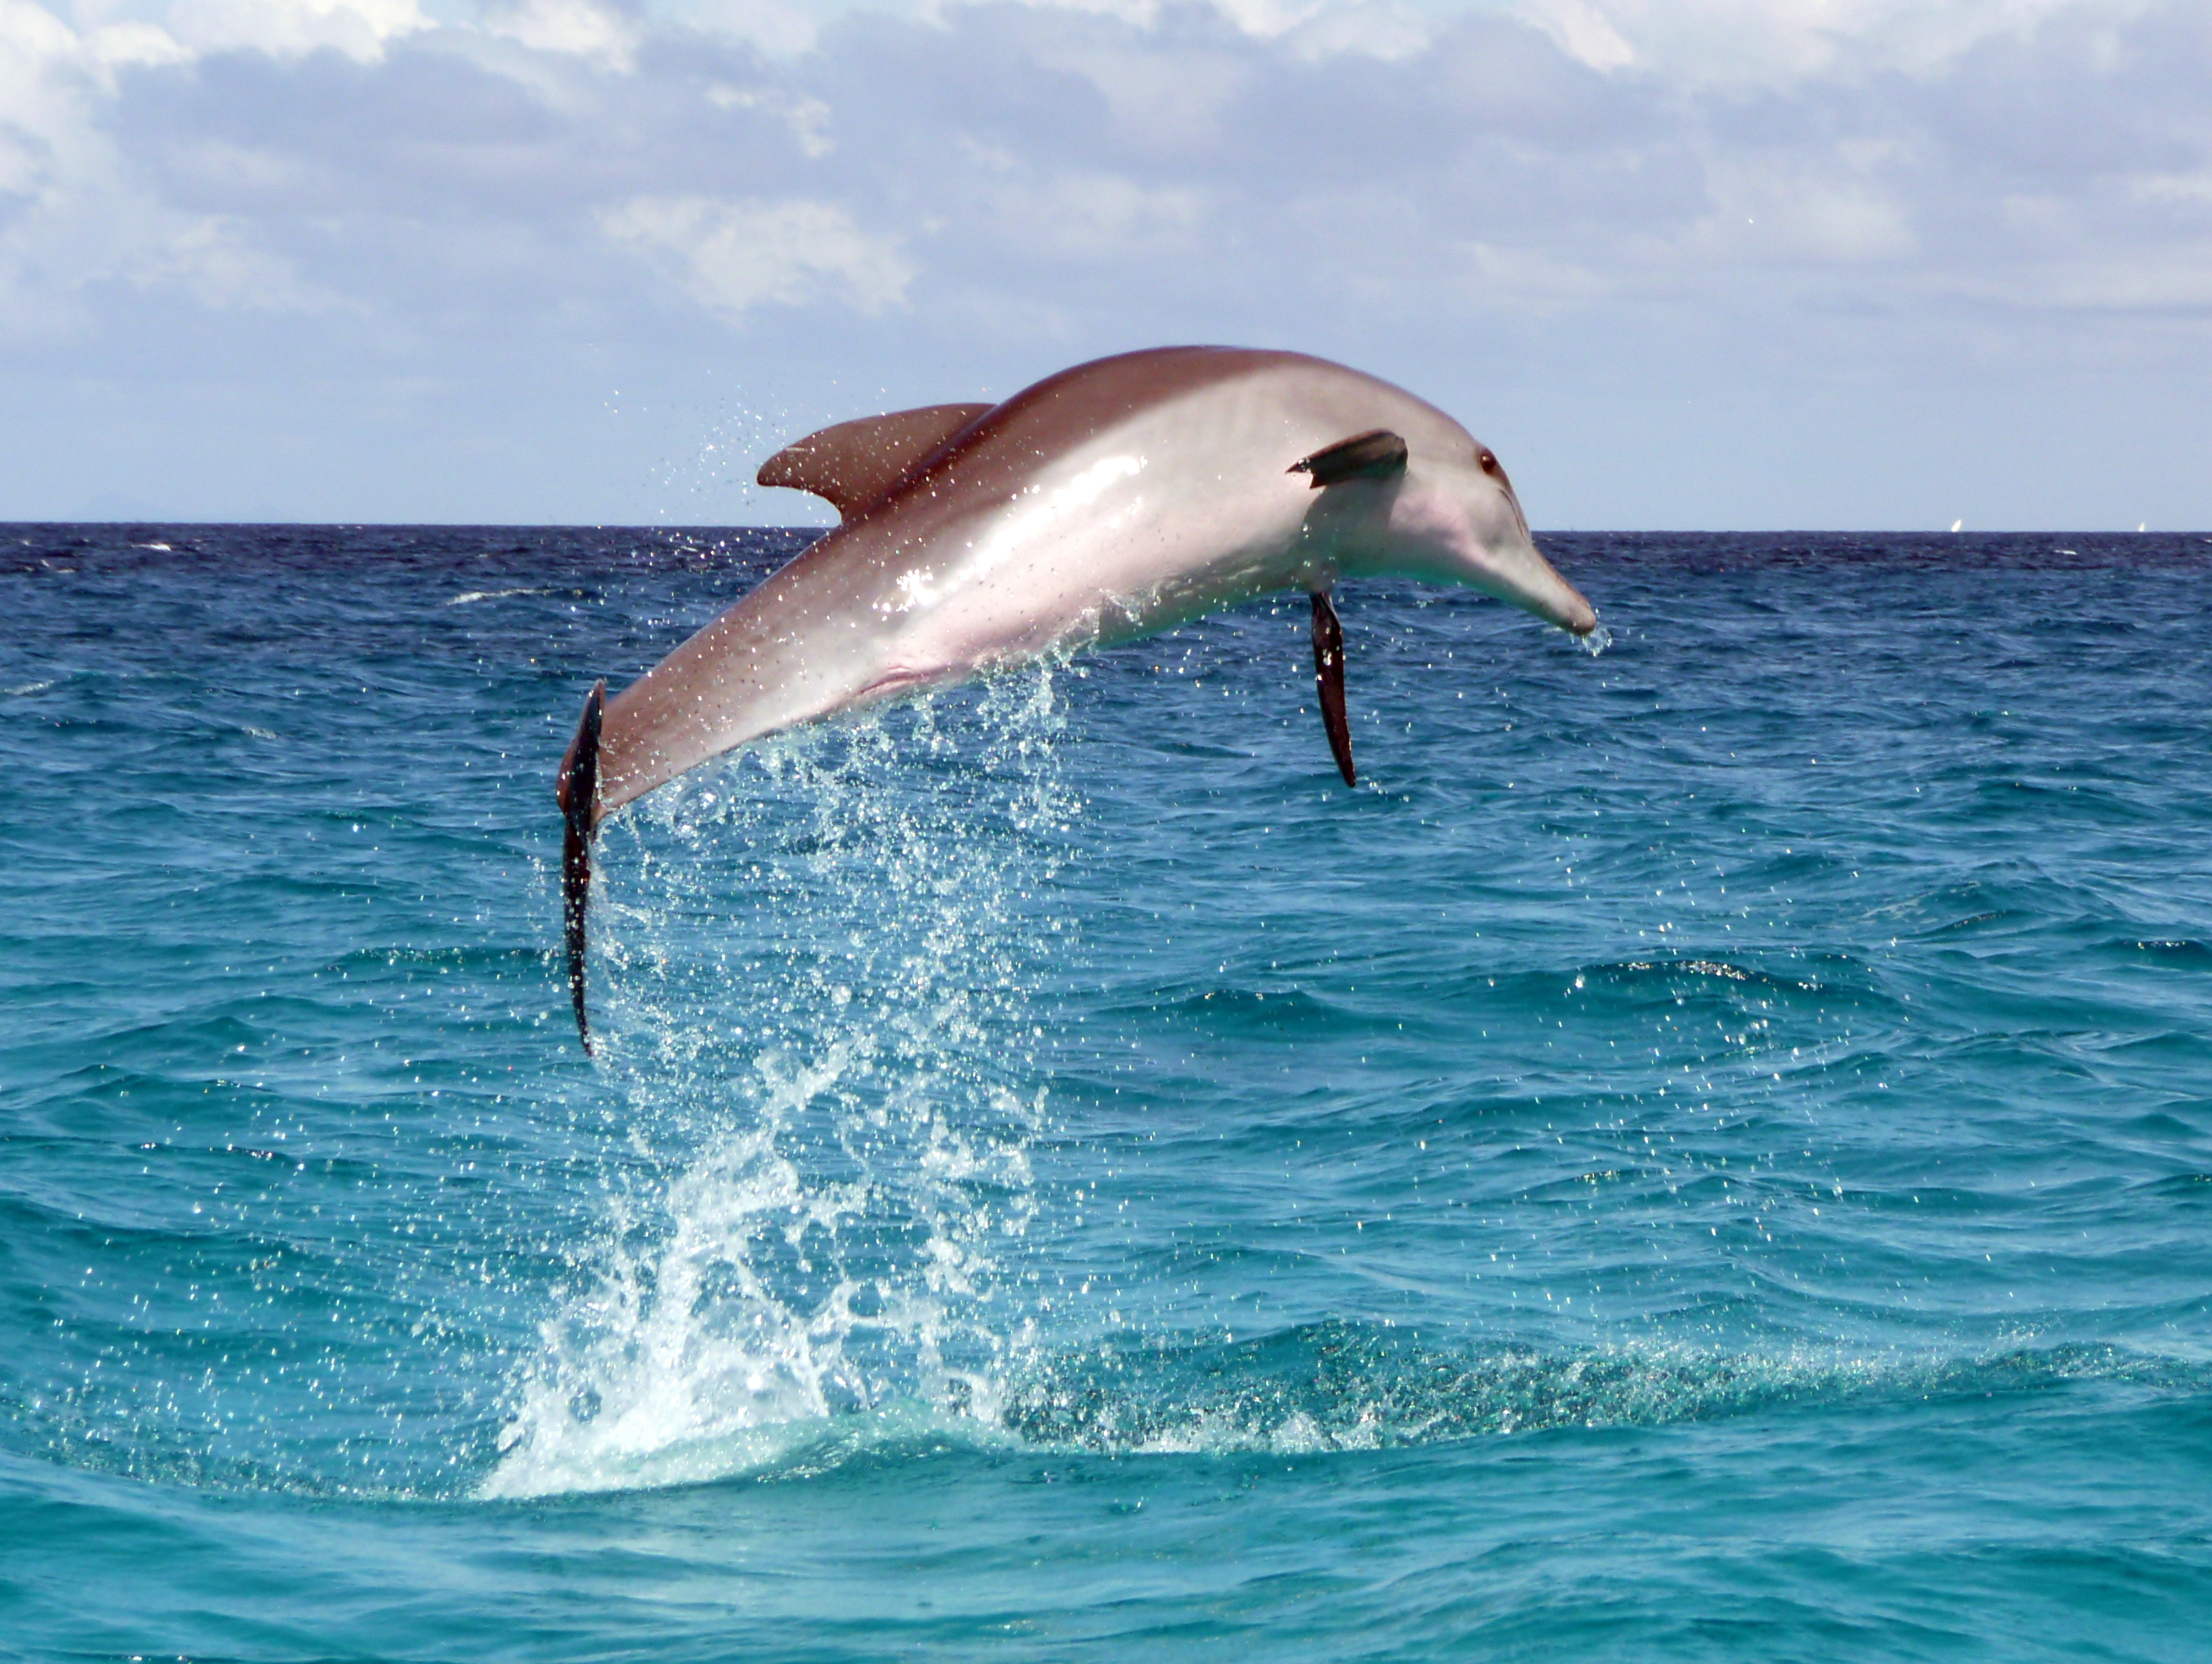 File:Dolphin leap.JPG - Wikipedia, the free encyclopedia